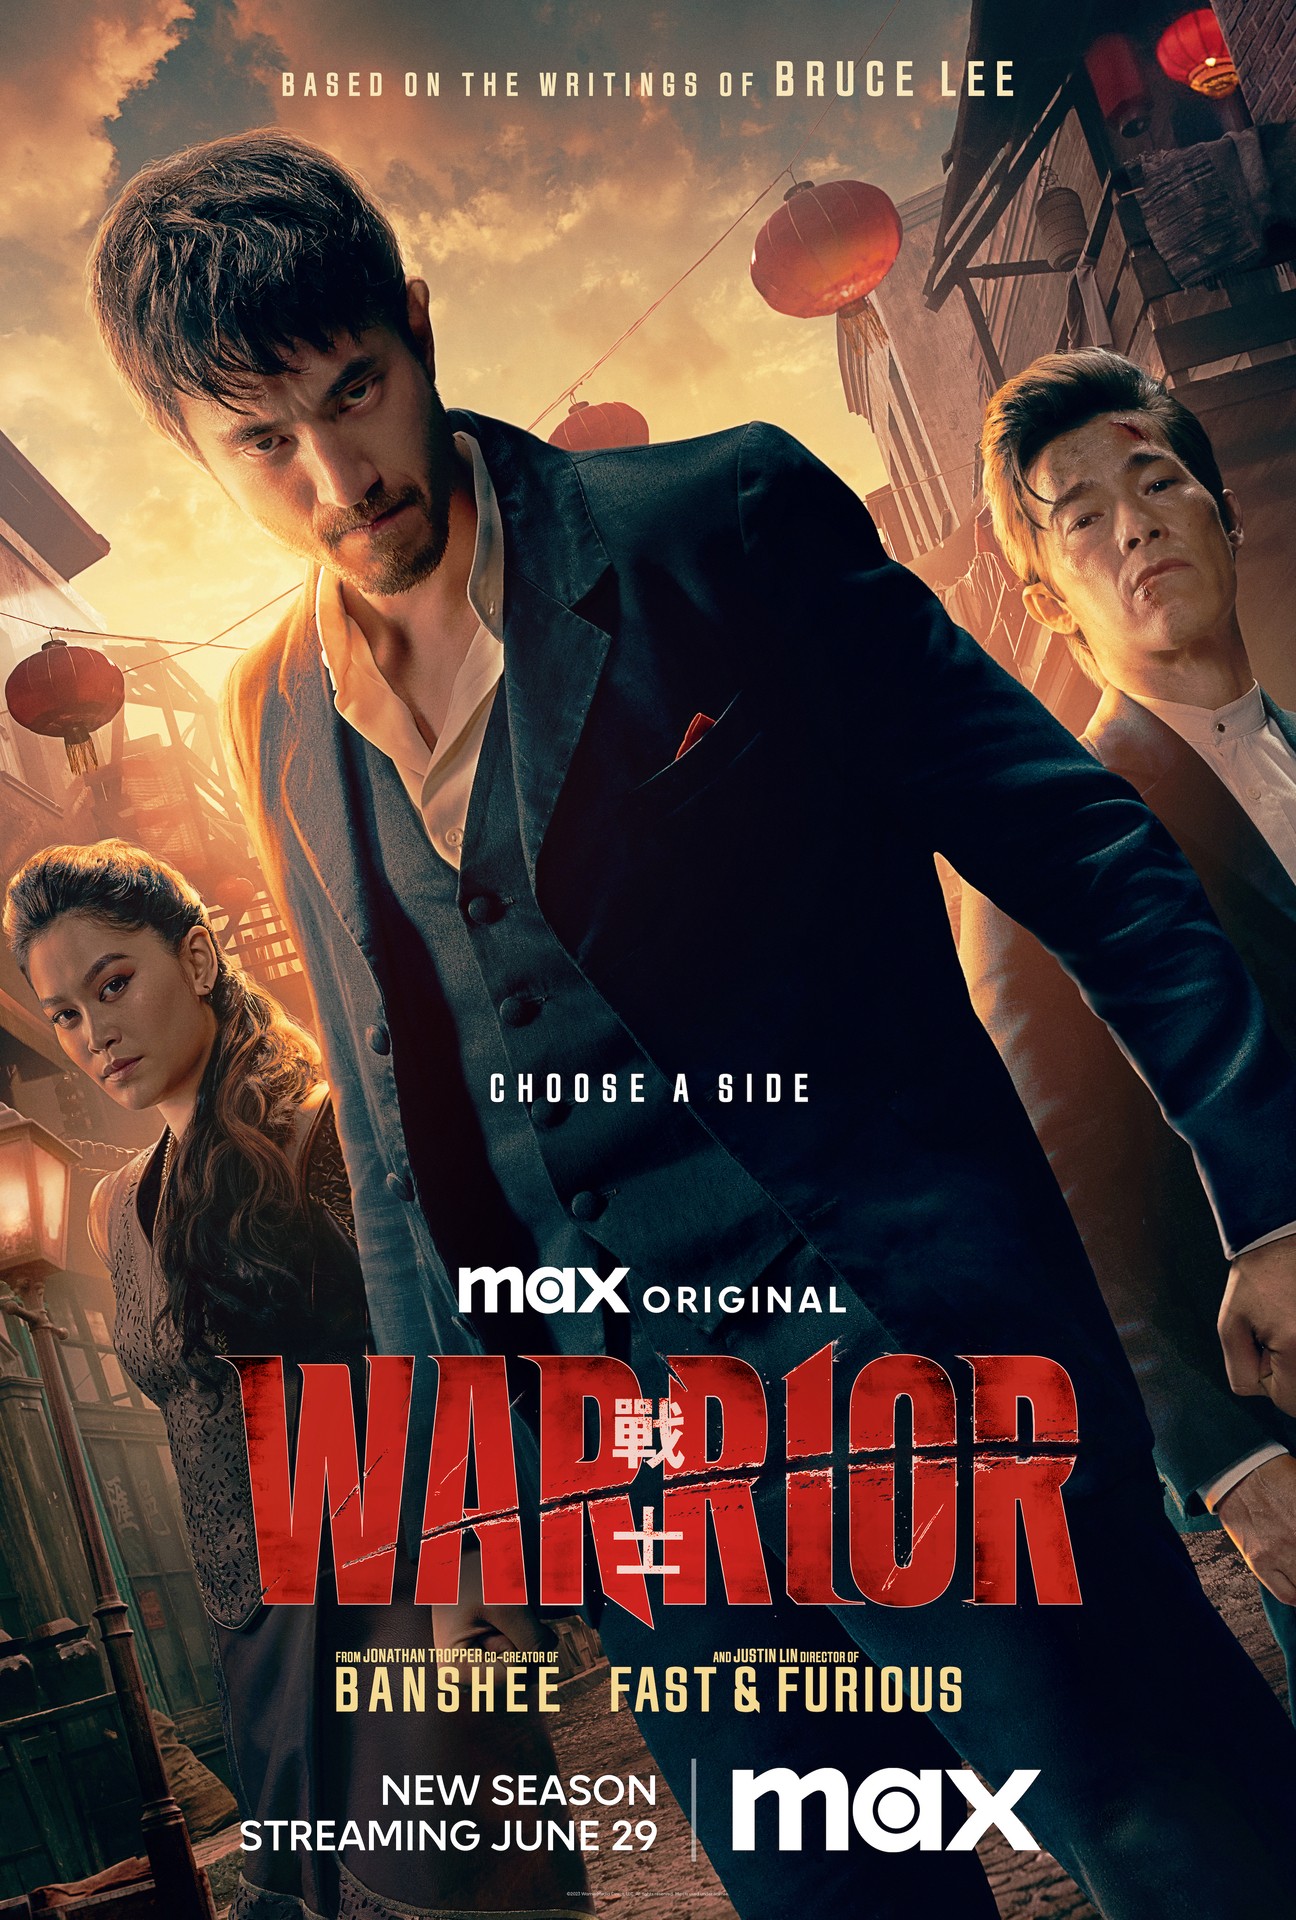 Warrior Season 3 Trailer  HBOMax, Release Date, Cast & Production  Details!! 